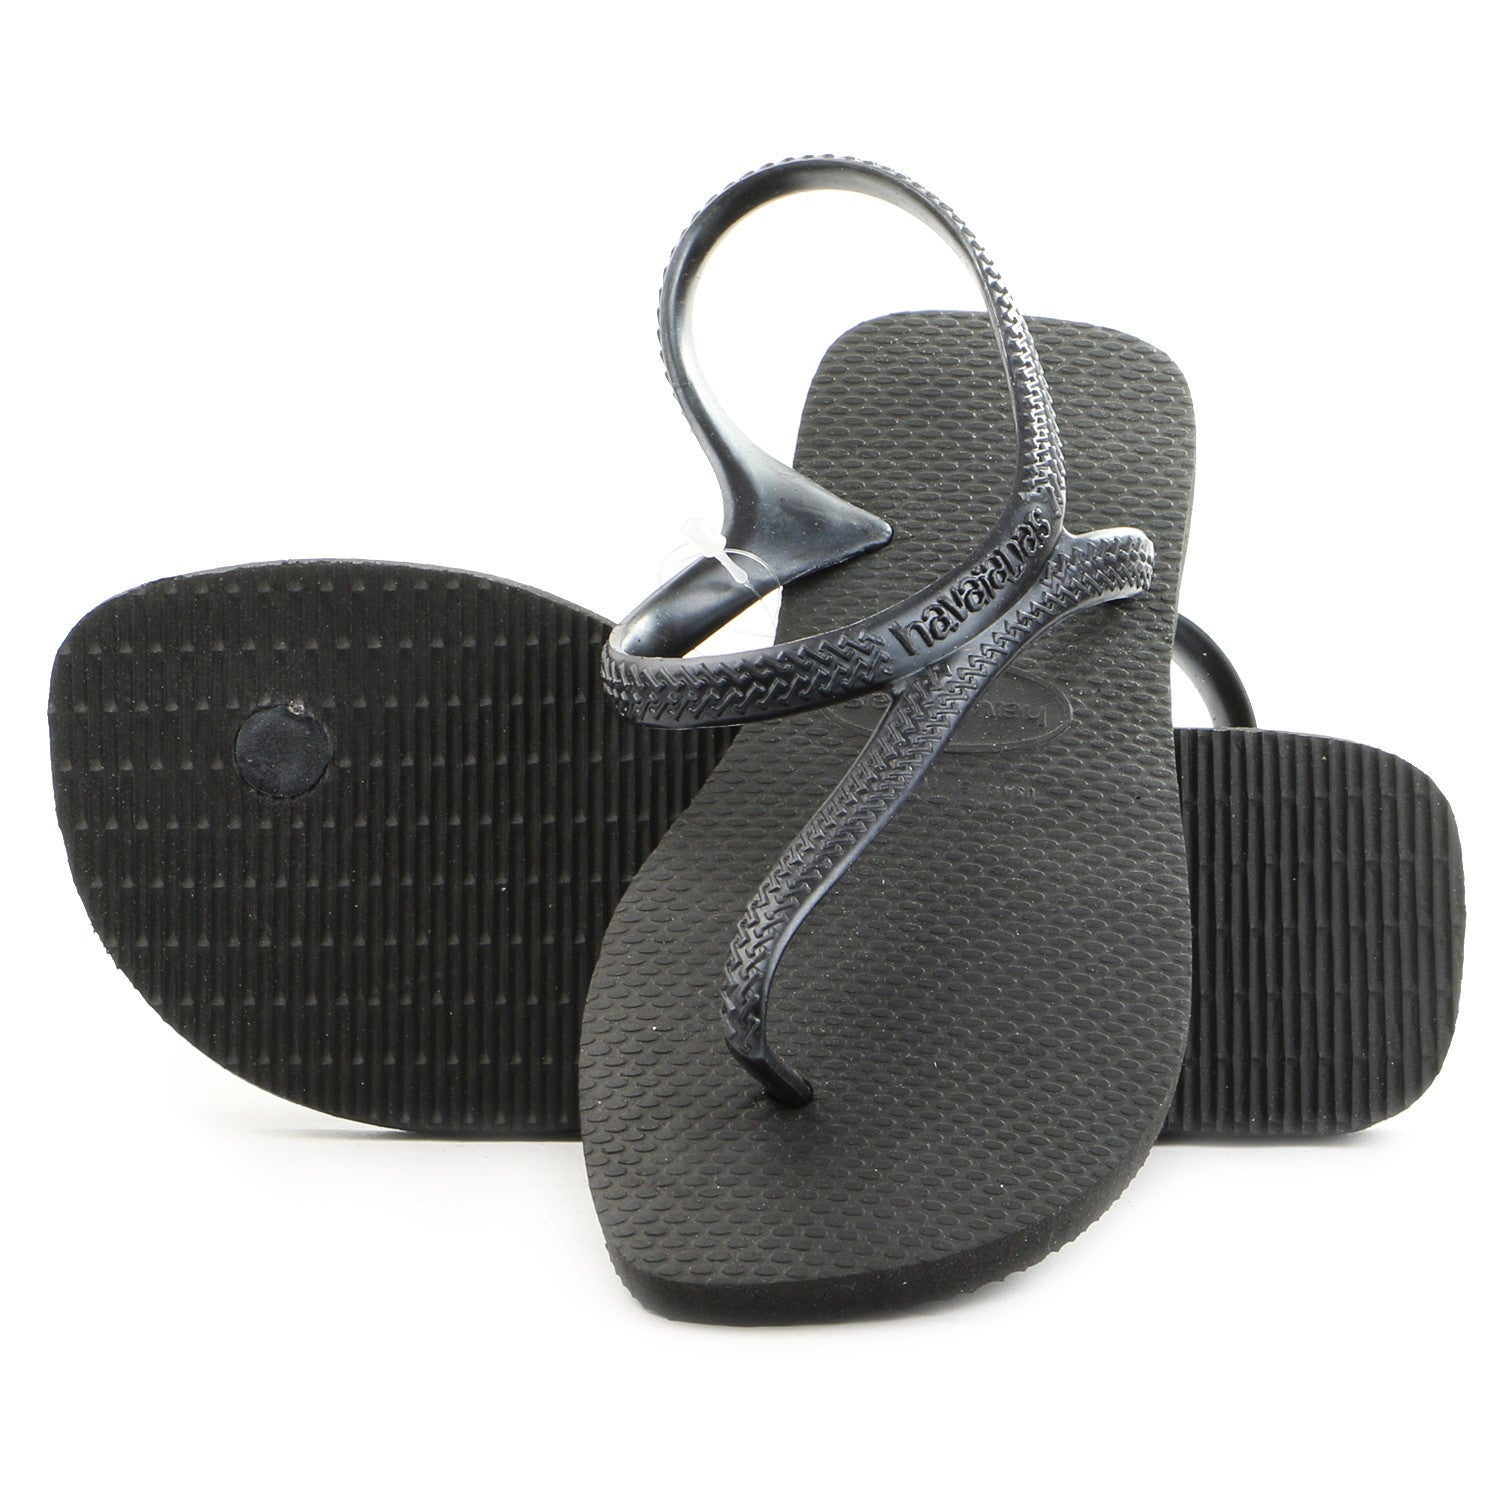 havaianas flip flop sandals